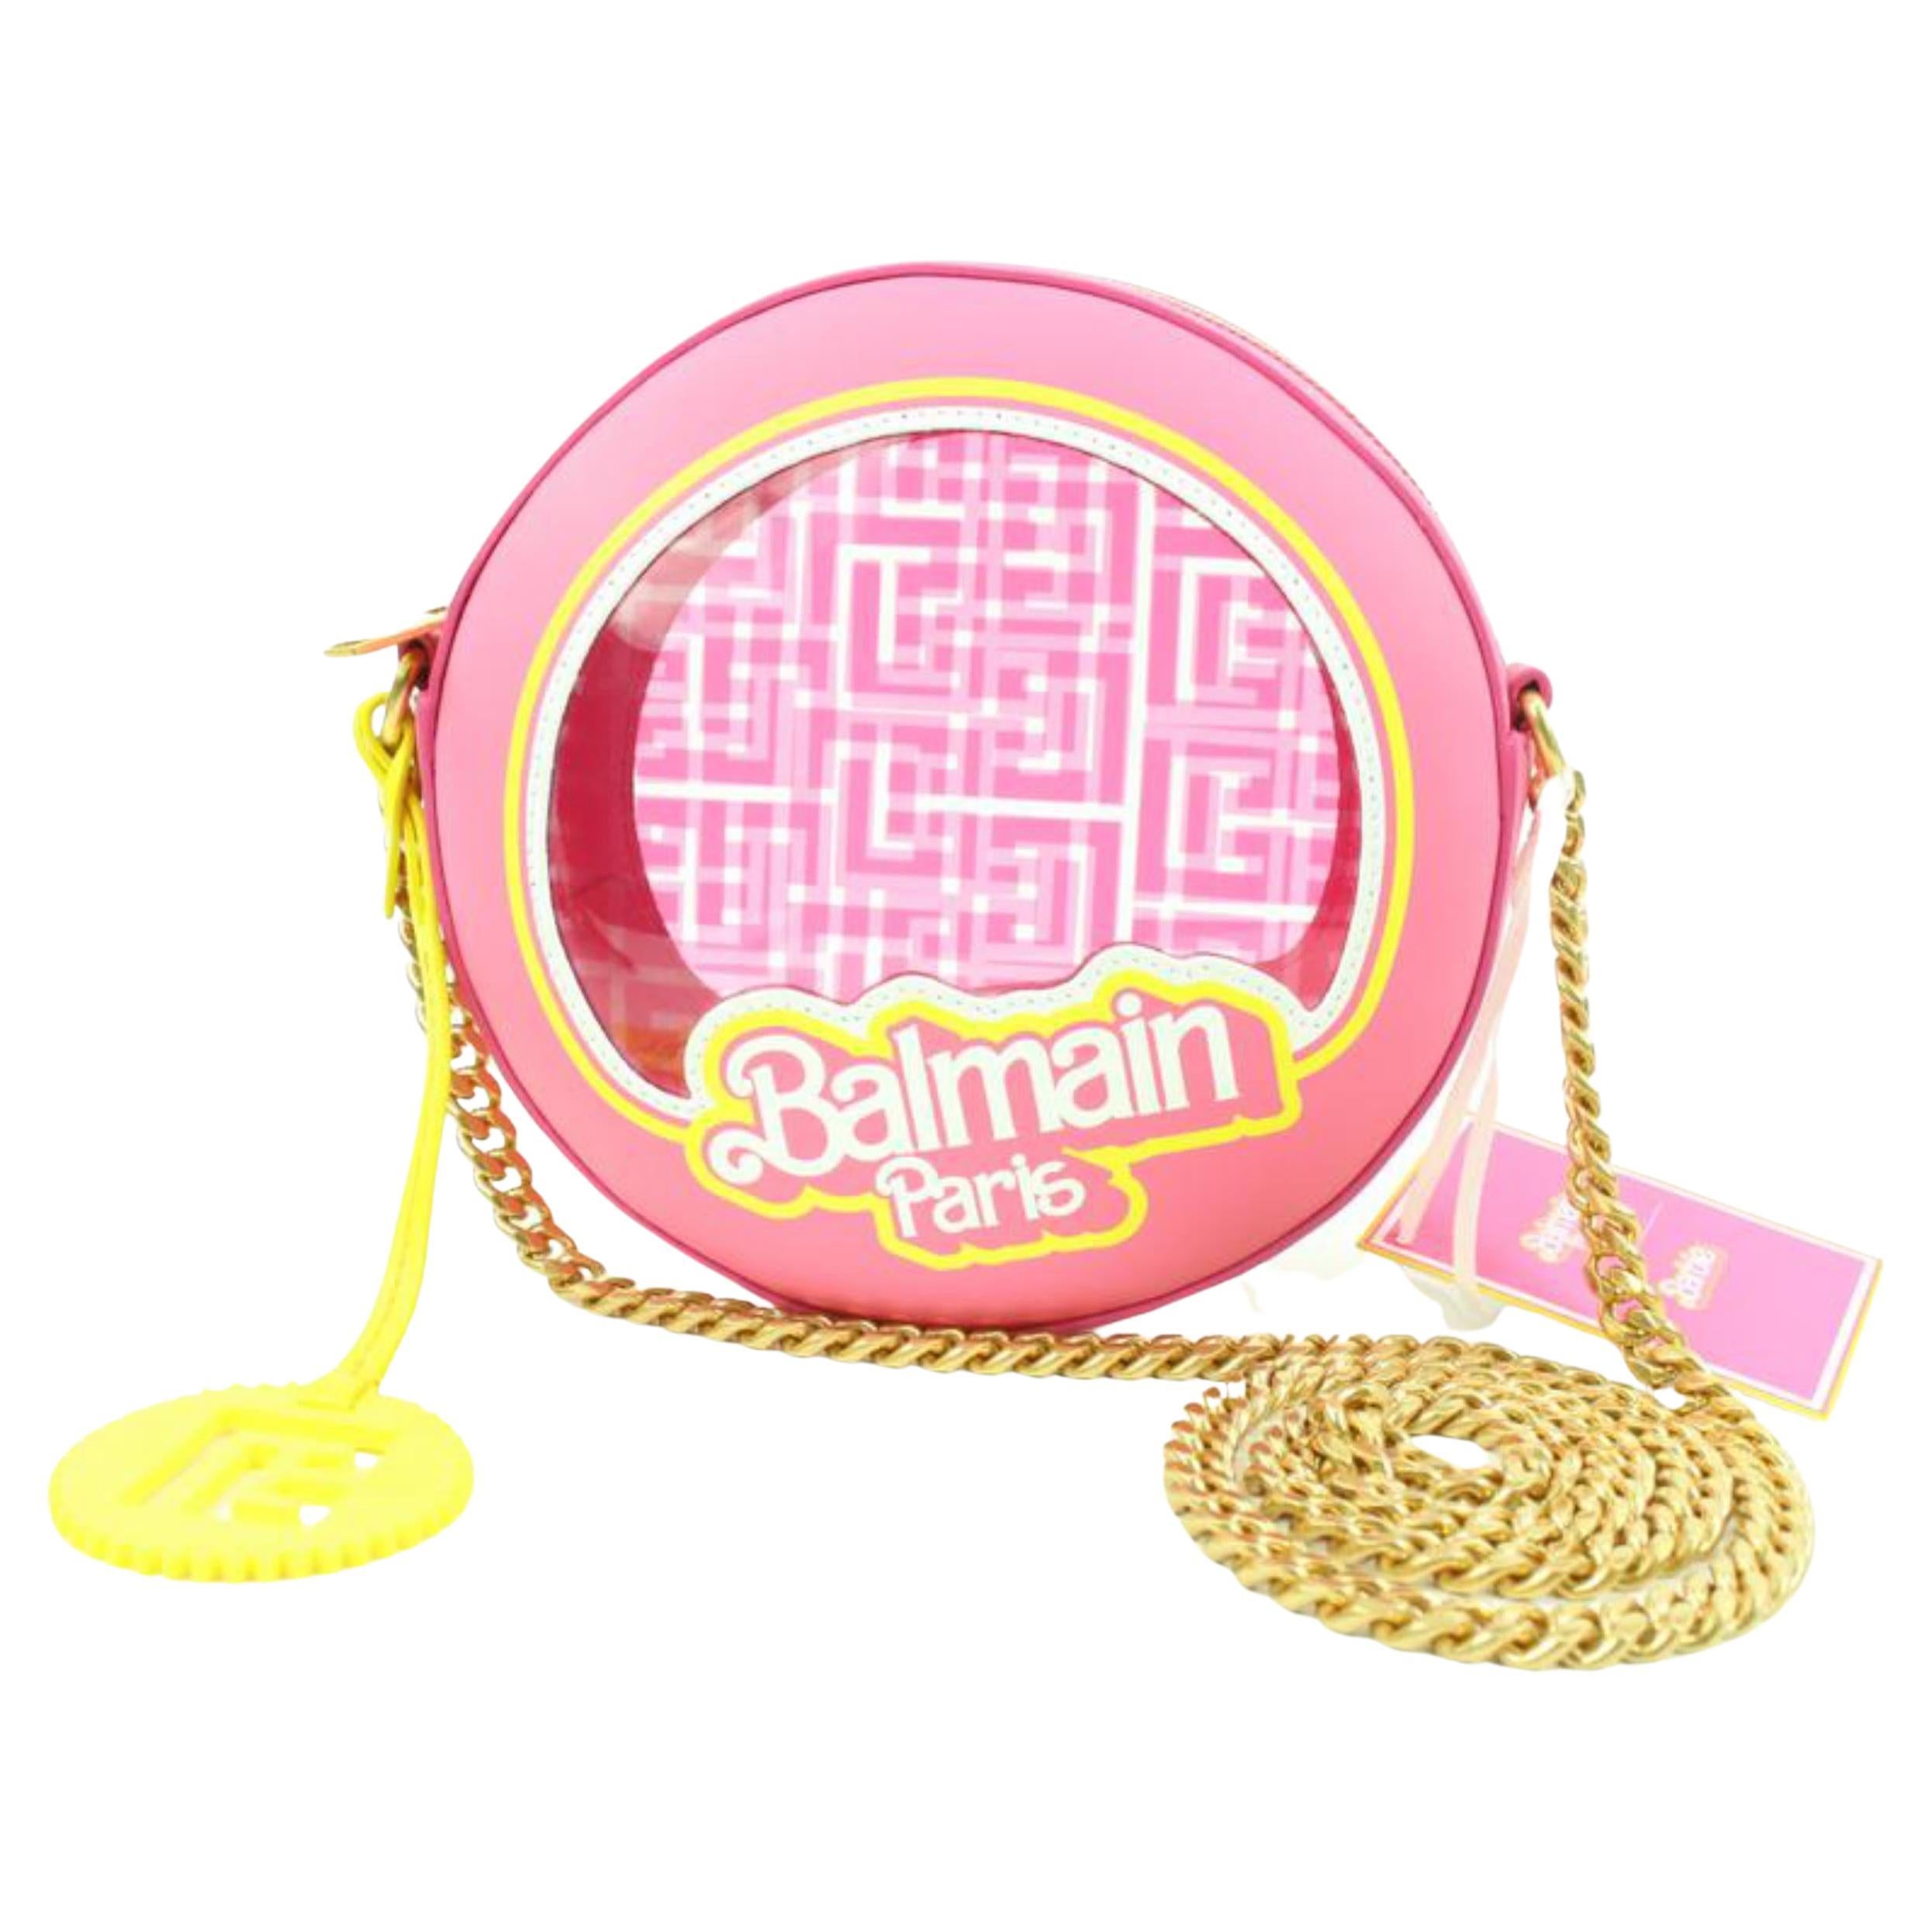 Balmain Barbie Translucent Pink Disco Round  Crossbody Bag  1BM318 For Sale